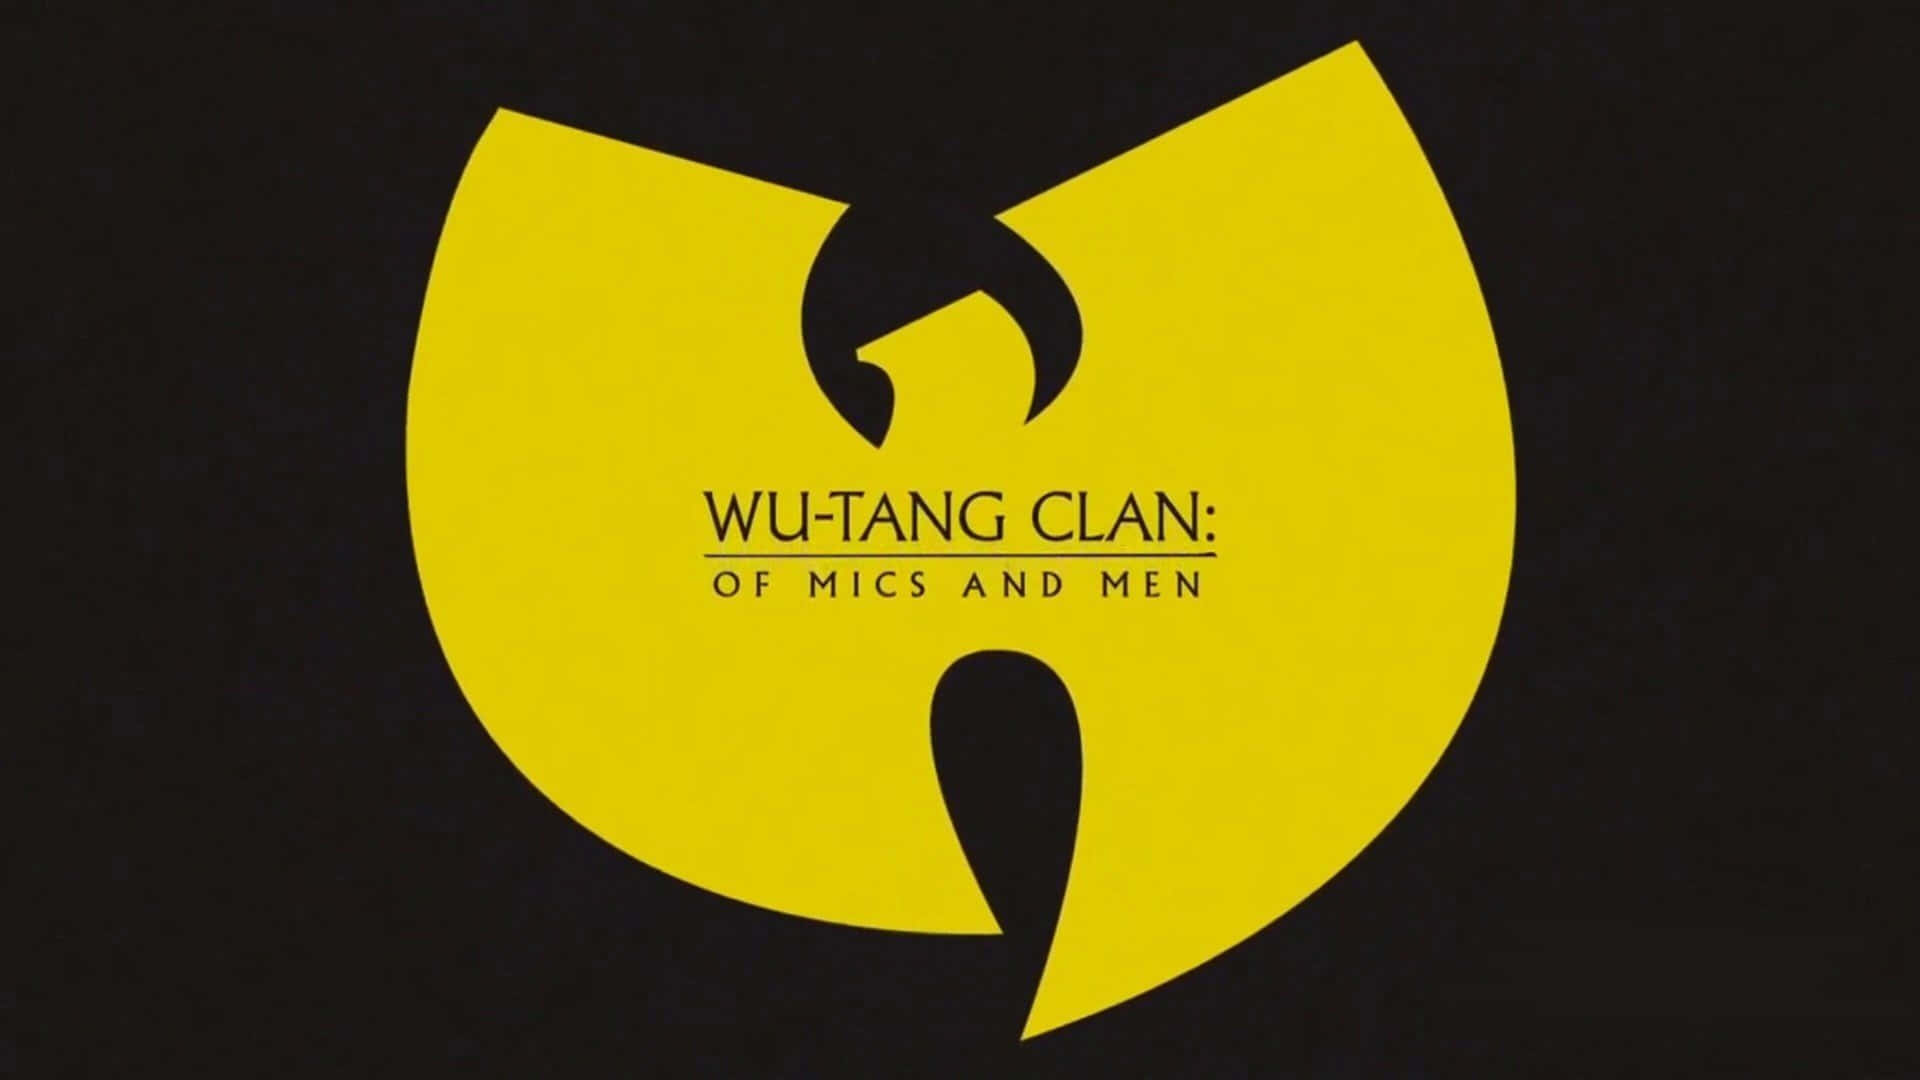 Wu Tang Clan - Dj Mc&Men Wallpaper